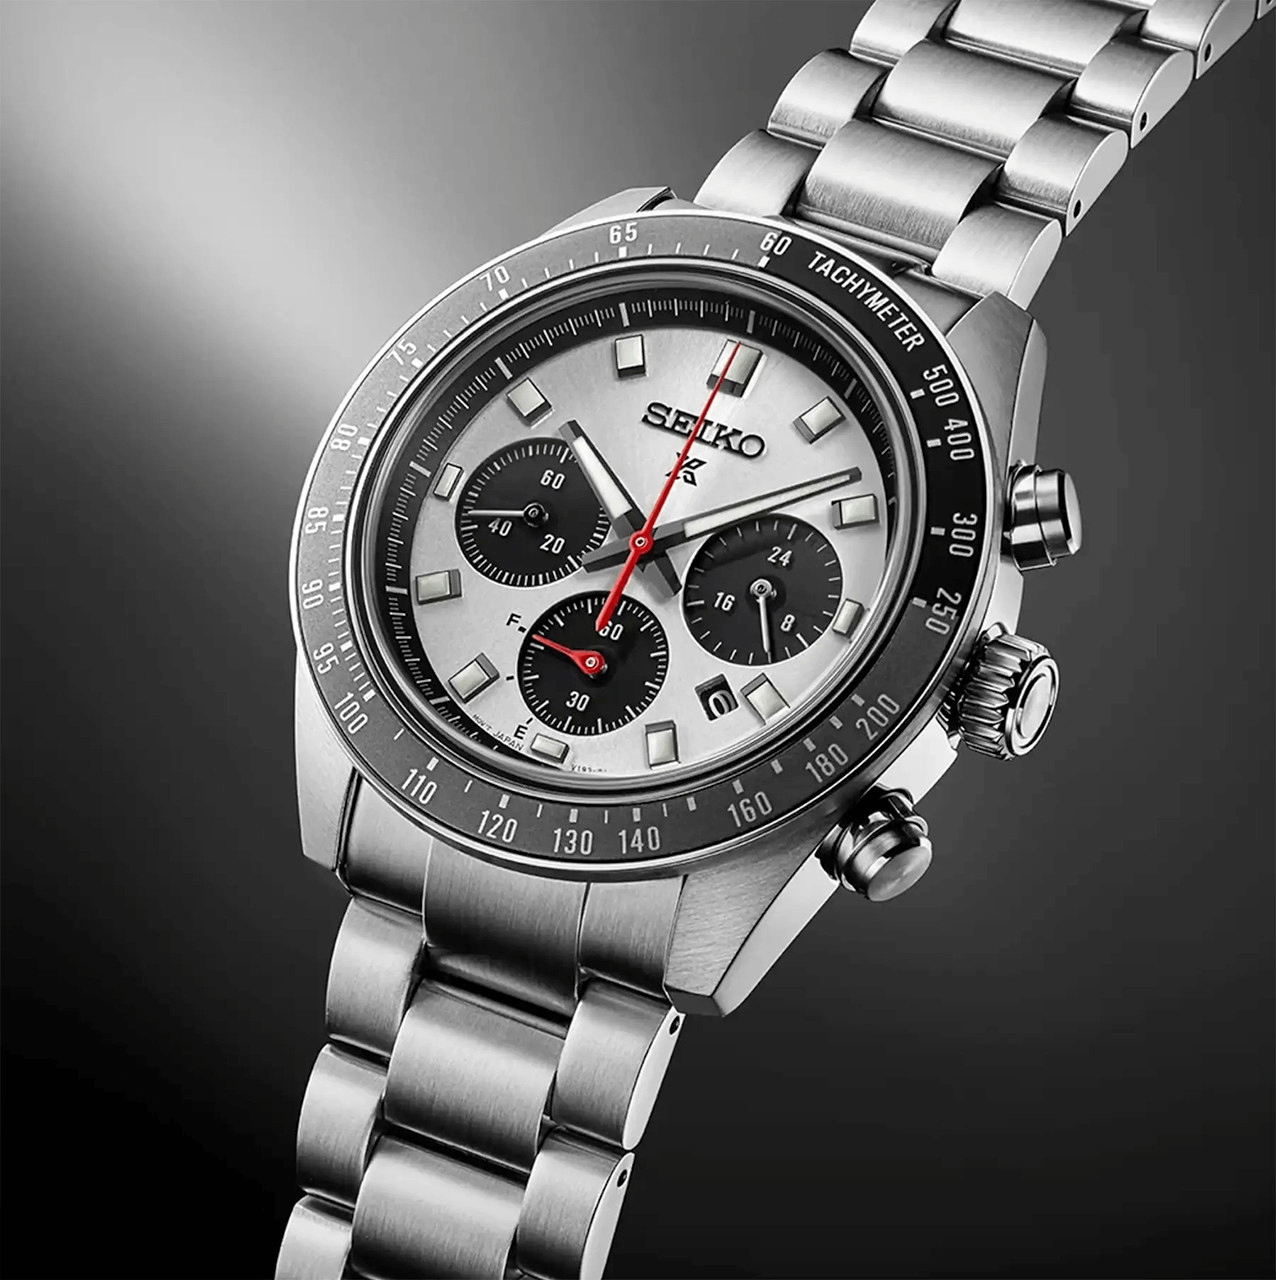 Newest Generation Seiko Prospex Speedtimer. Panda SSC911P watch on silver background